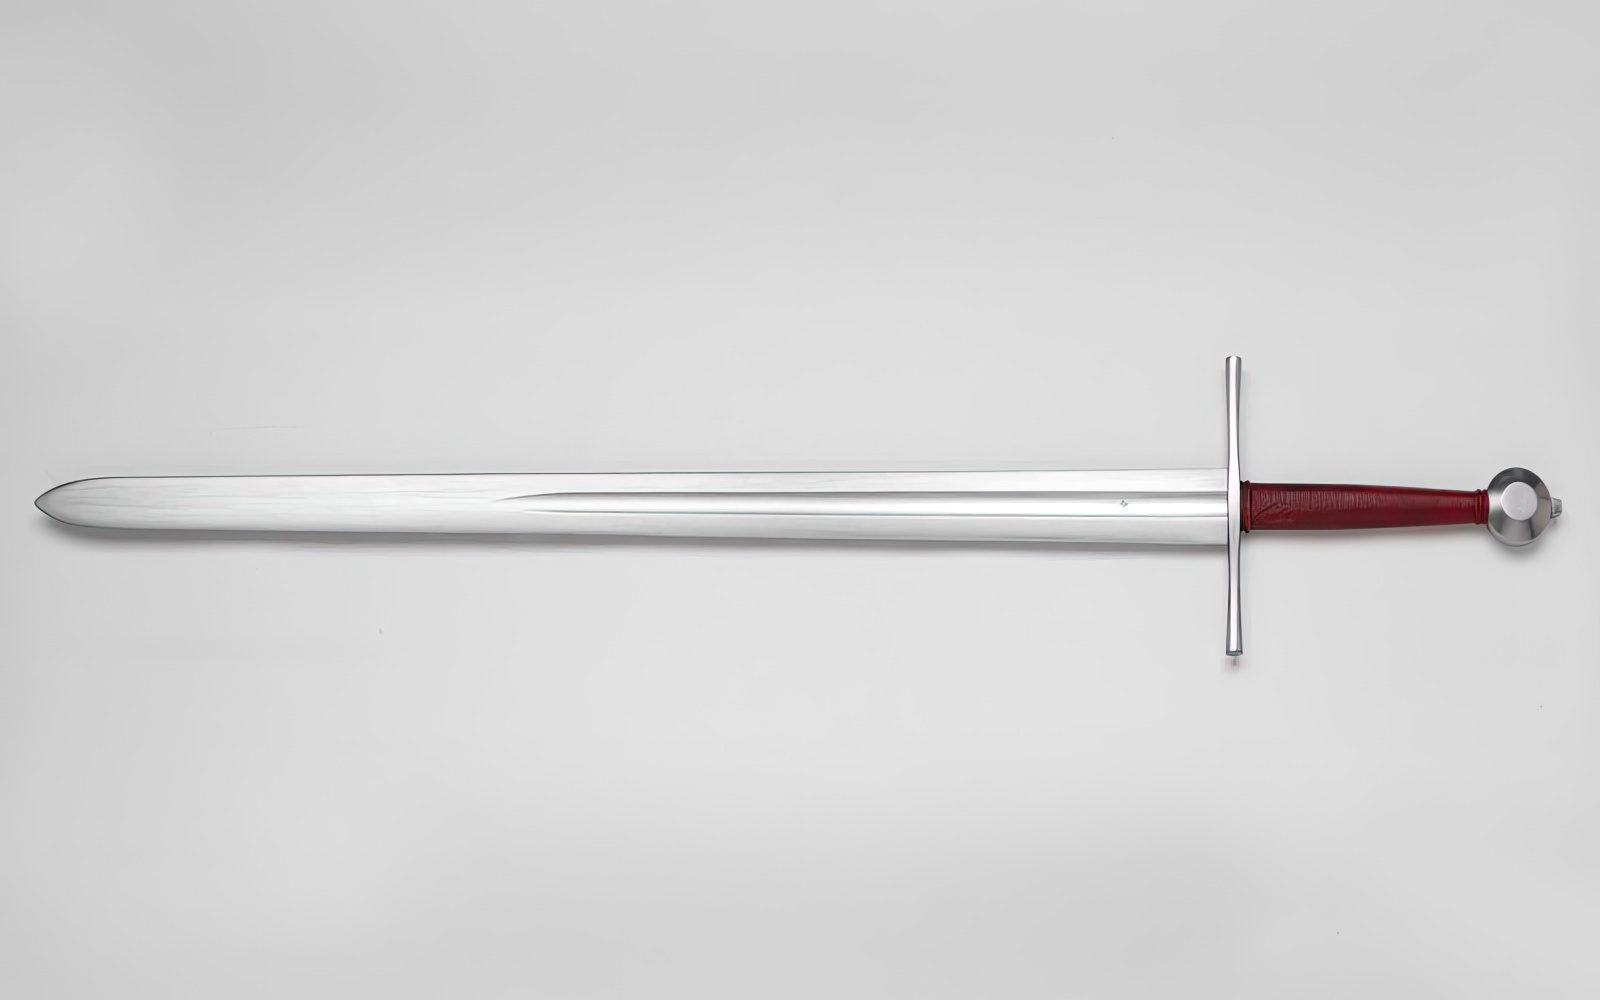 Oakeshott Type XIII: The European Knight’s Massive Cutting Sword